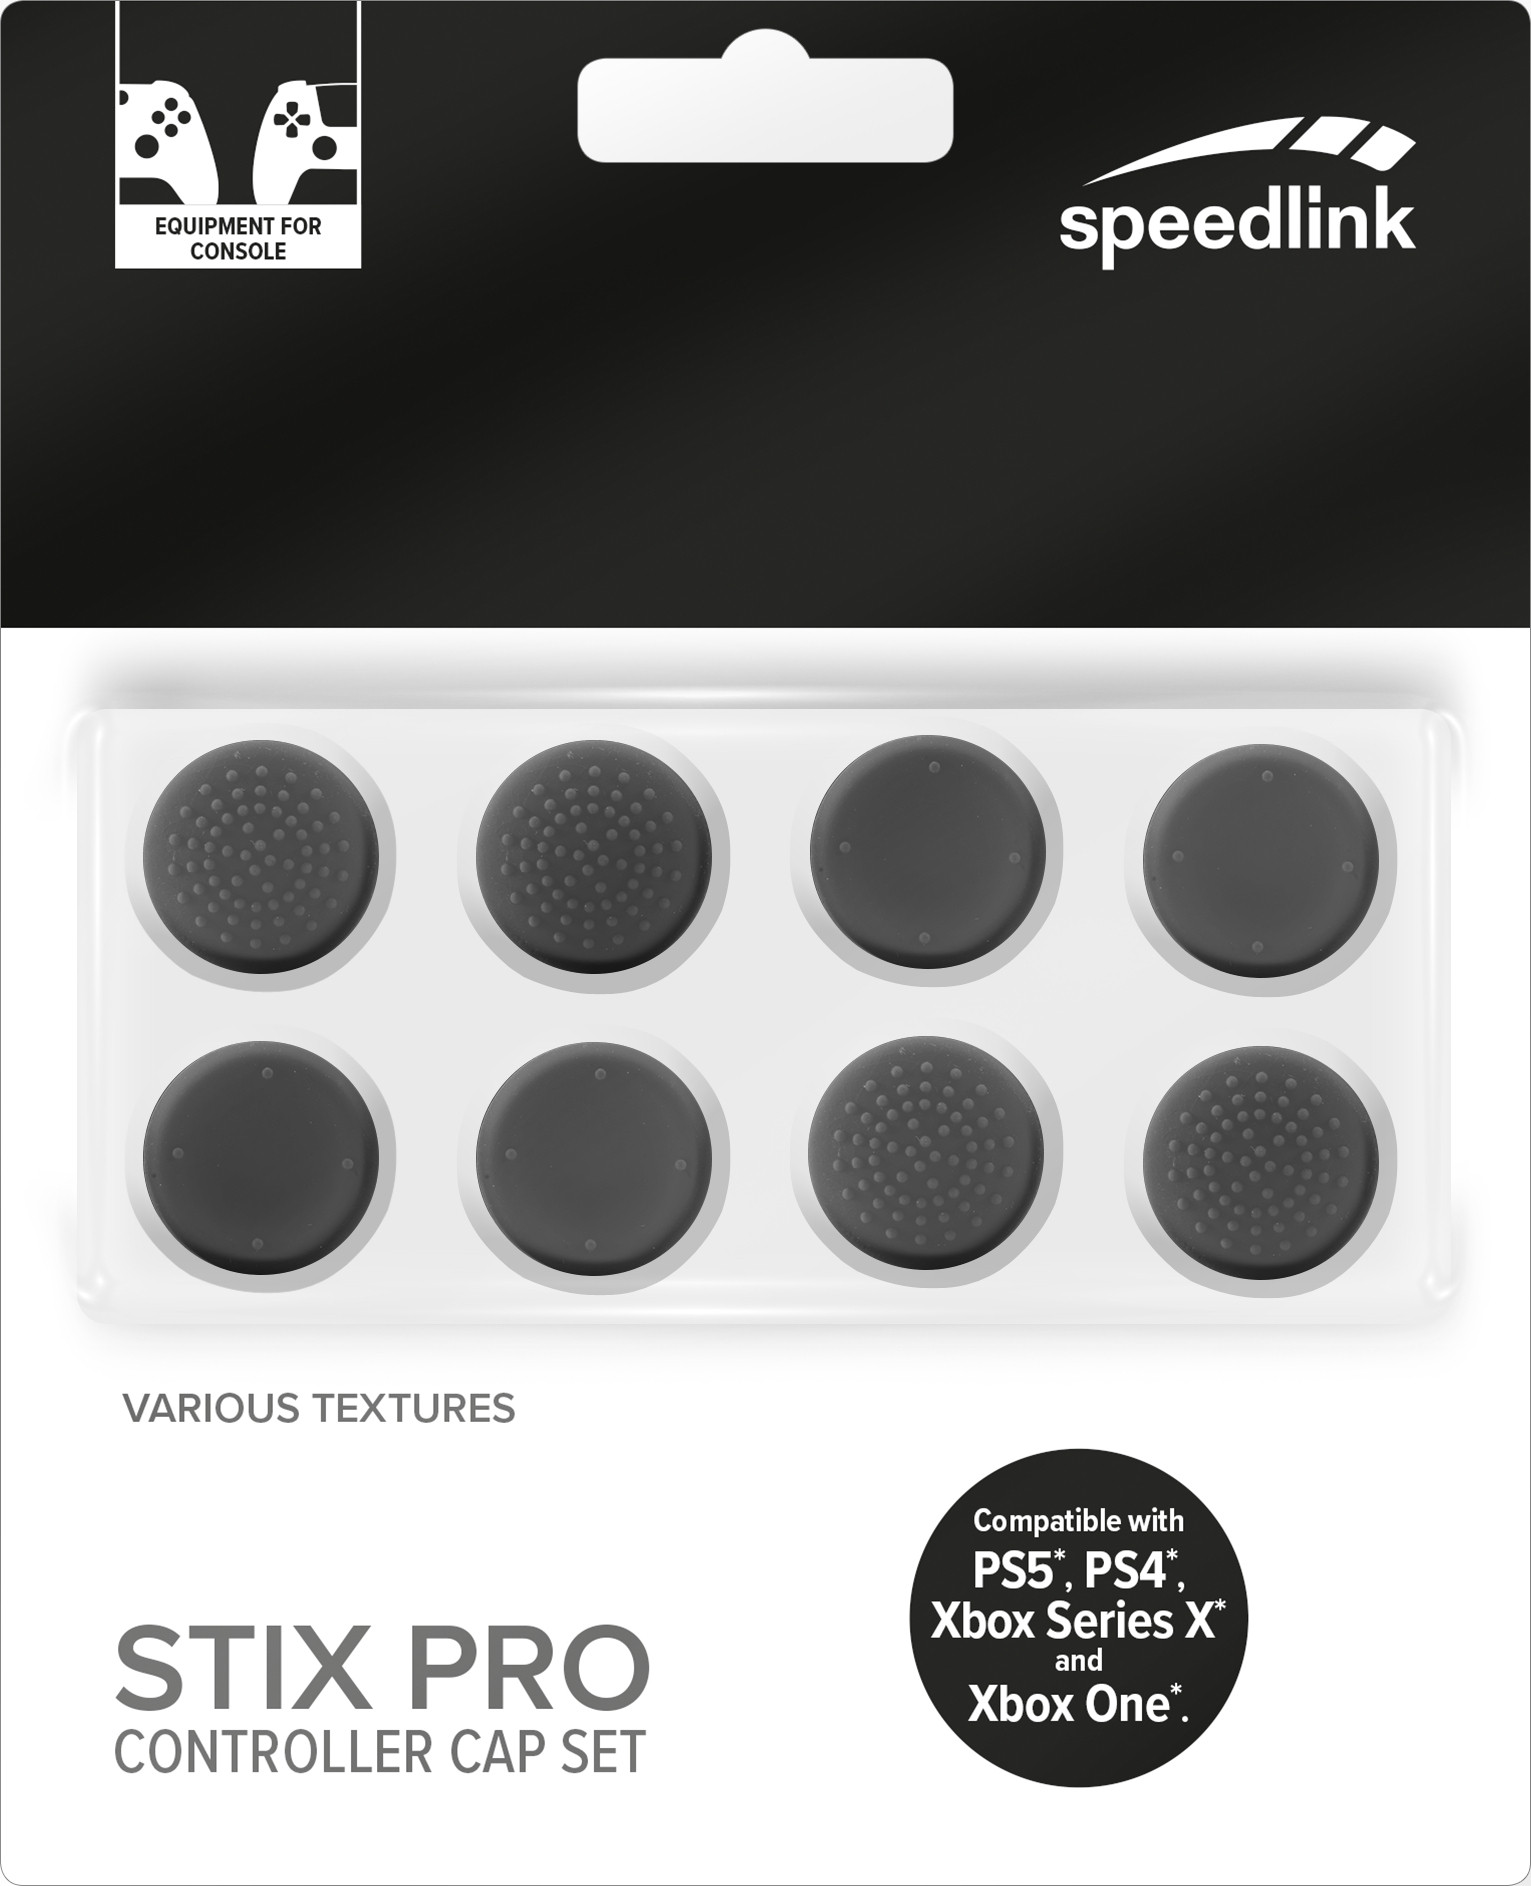 Speedlink Stix Pro Controller Cap Set